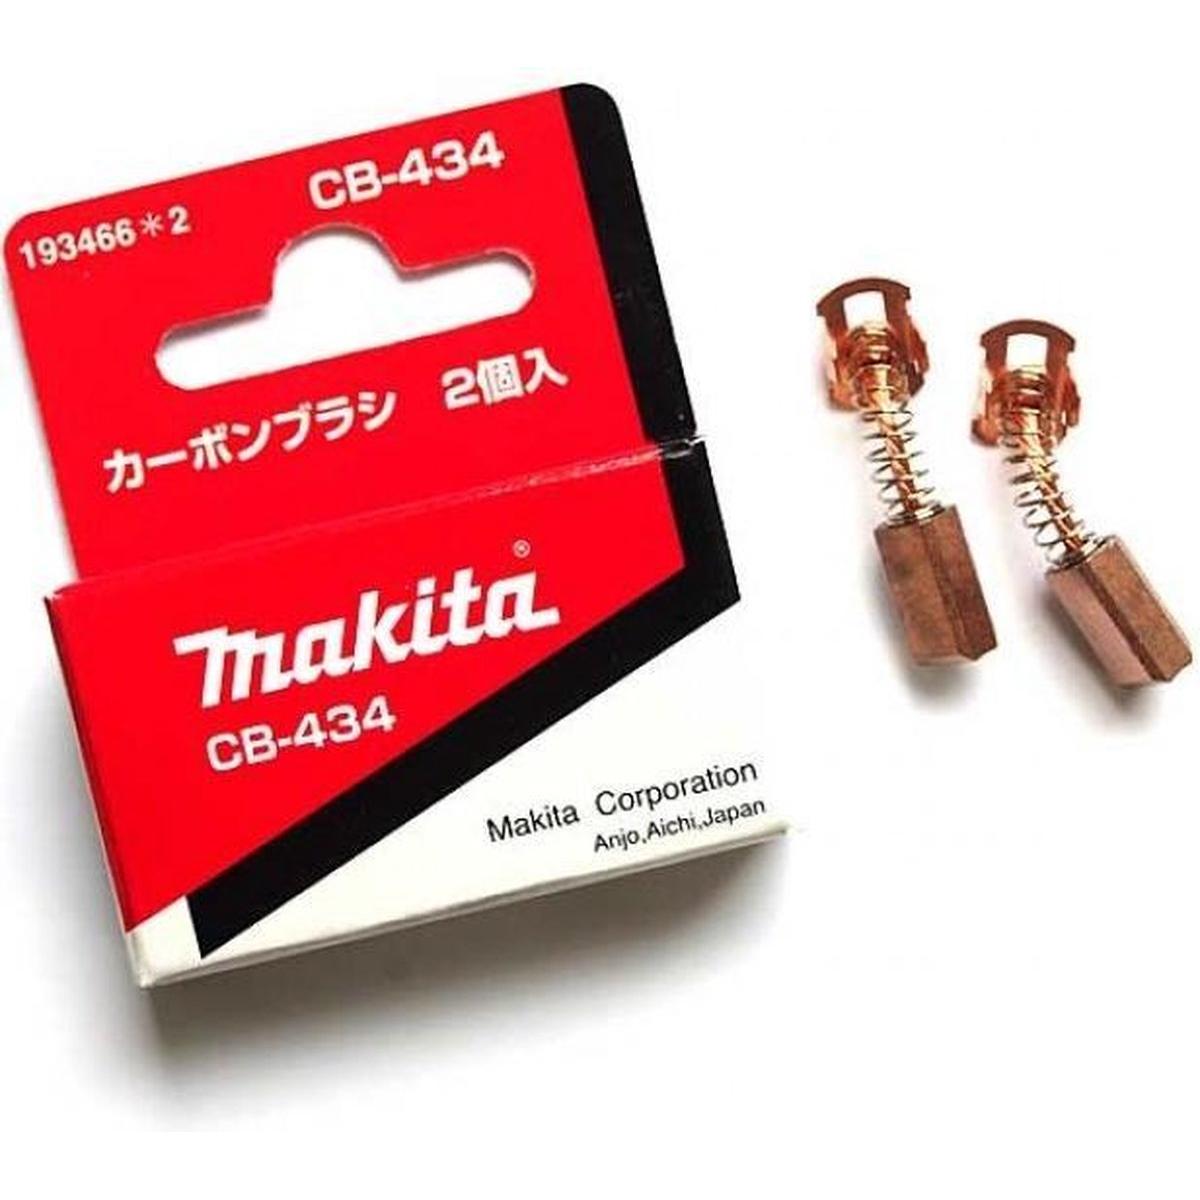 Makita Carbon Brush CB-434 Set Power Tool Services